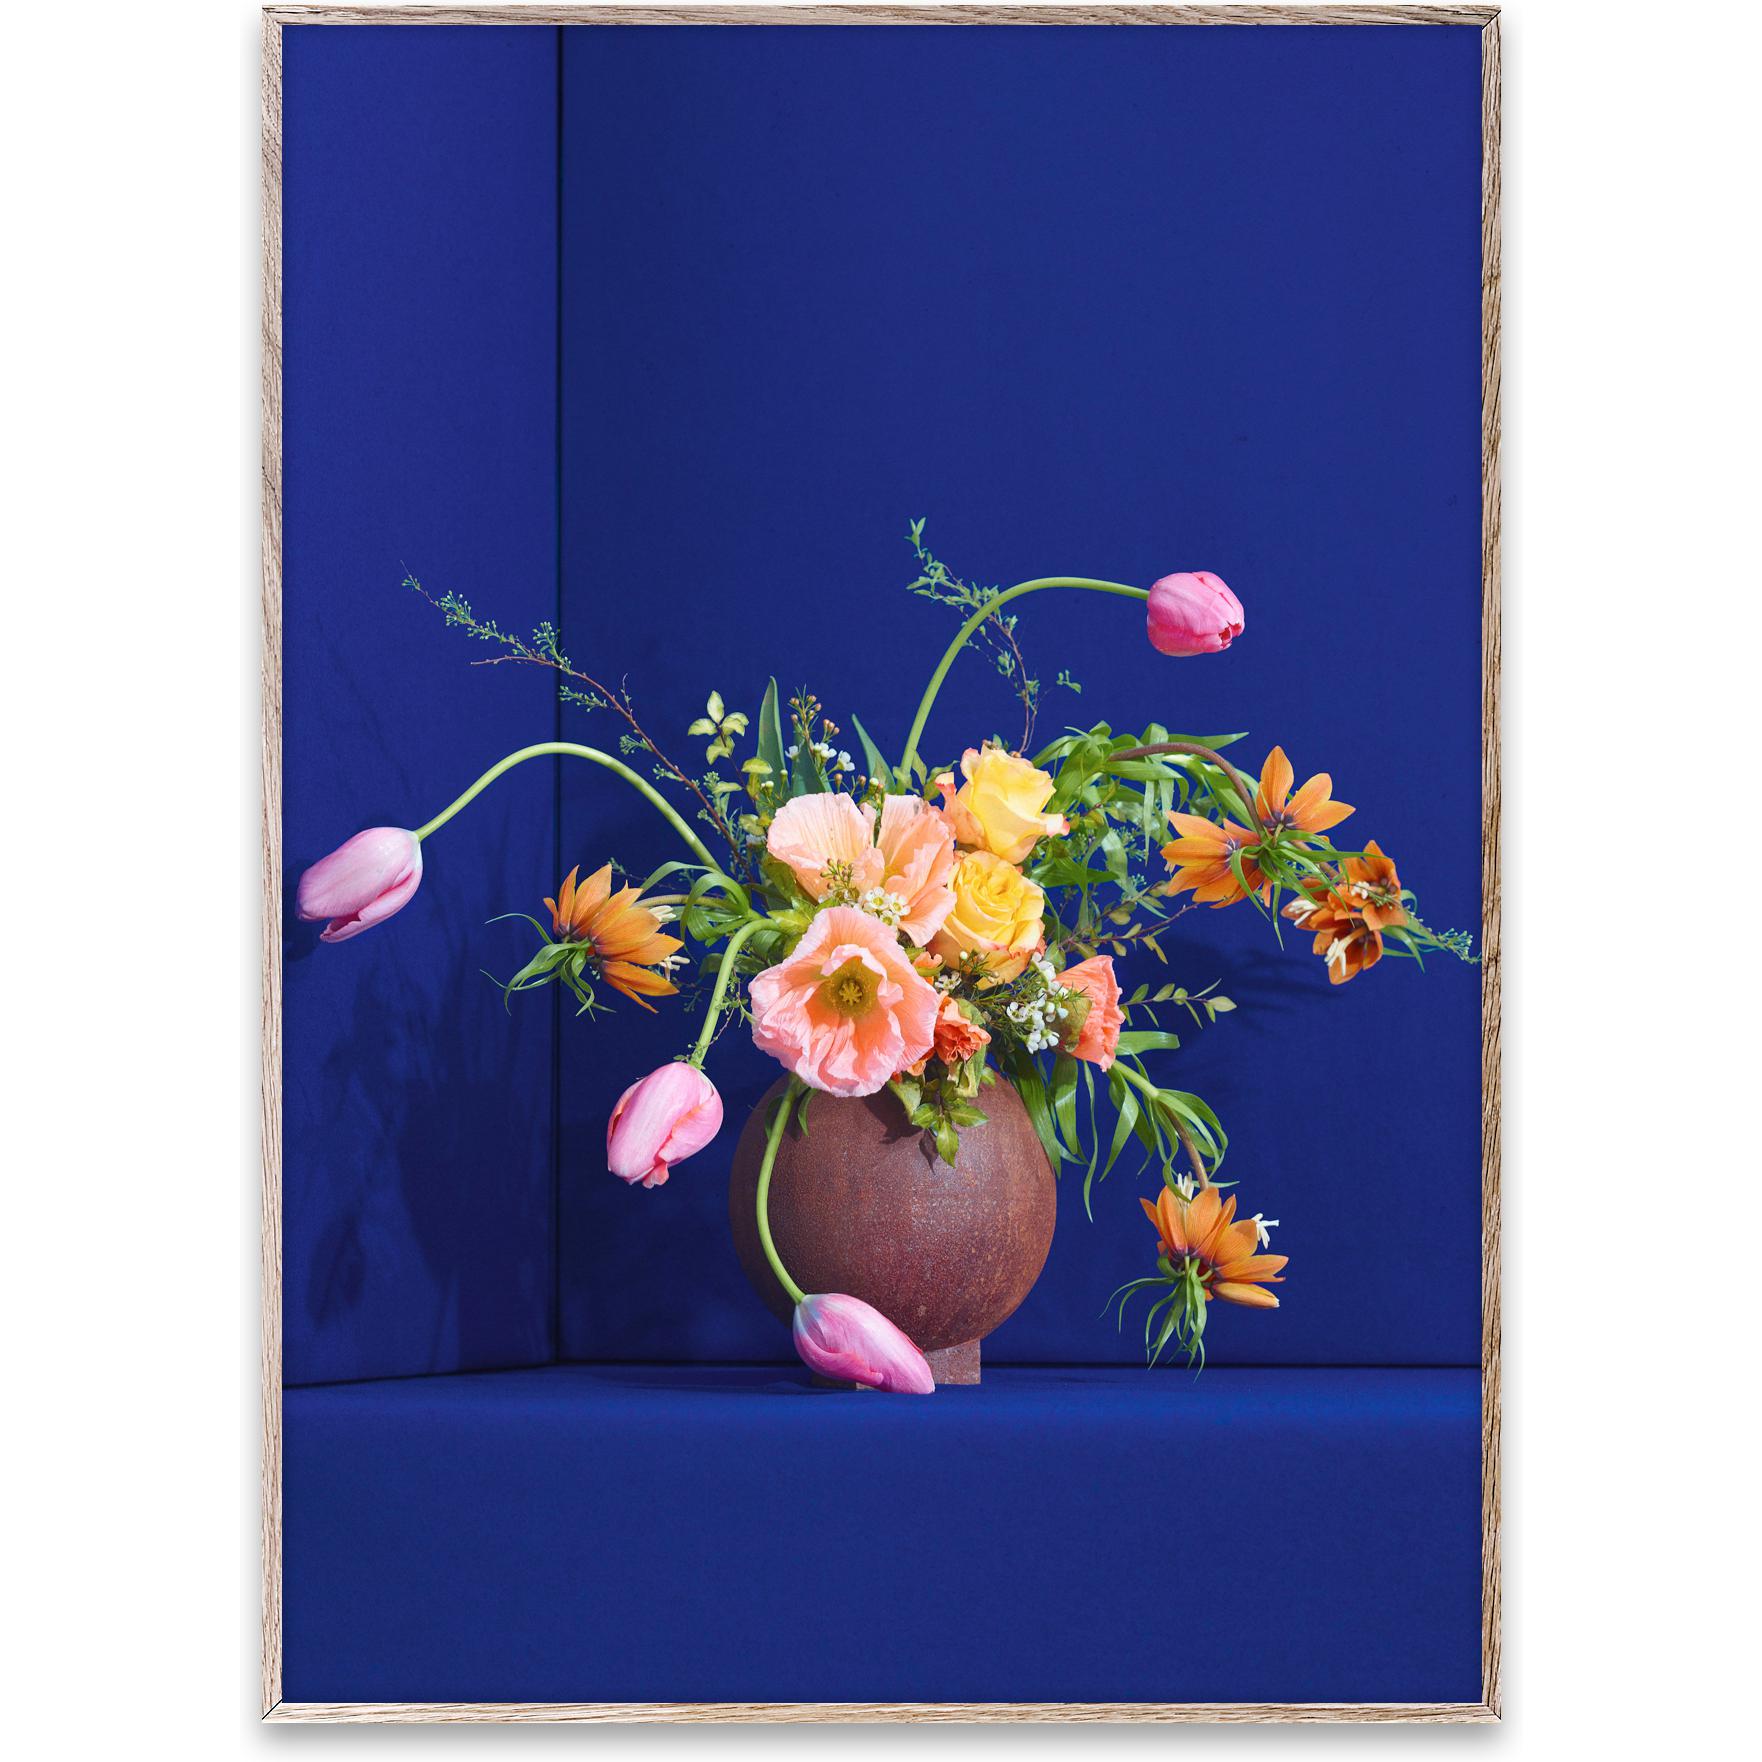 Paper Collective Blomst 01 Poster 50x70 cm, blå